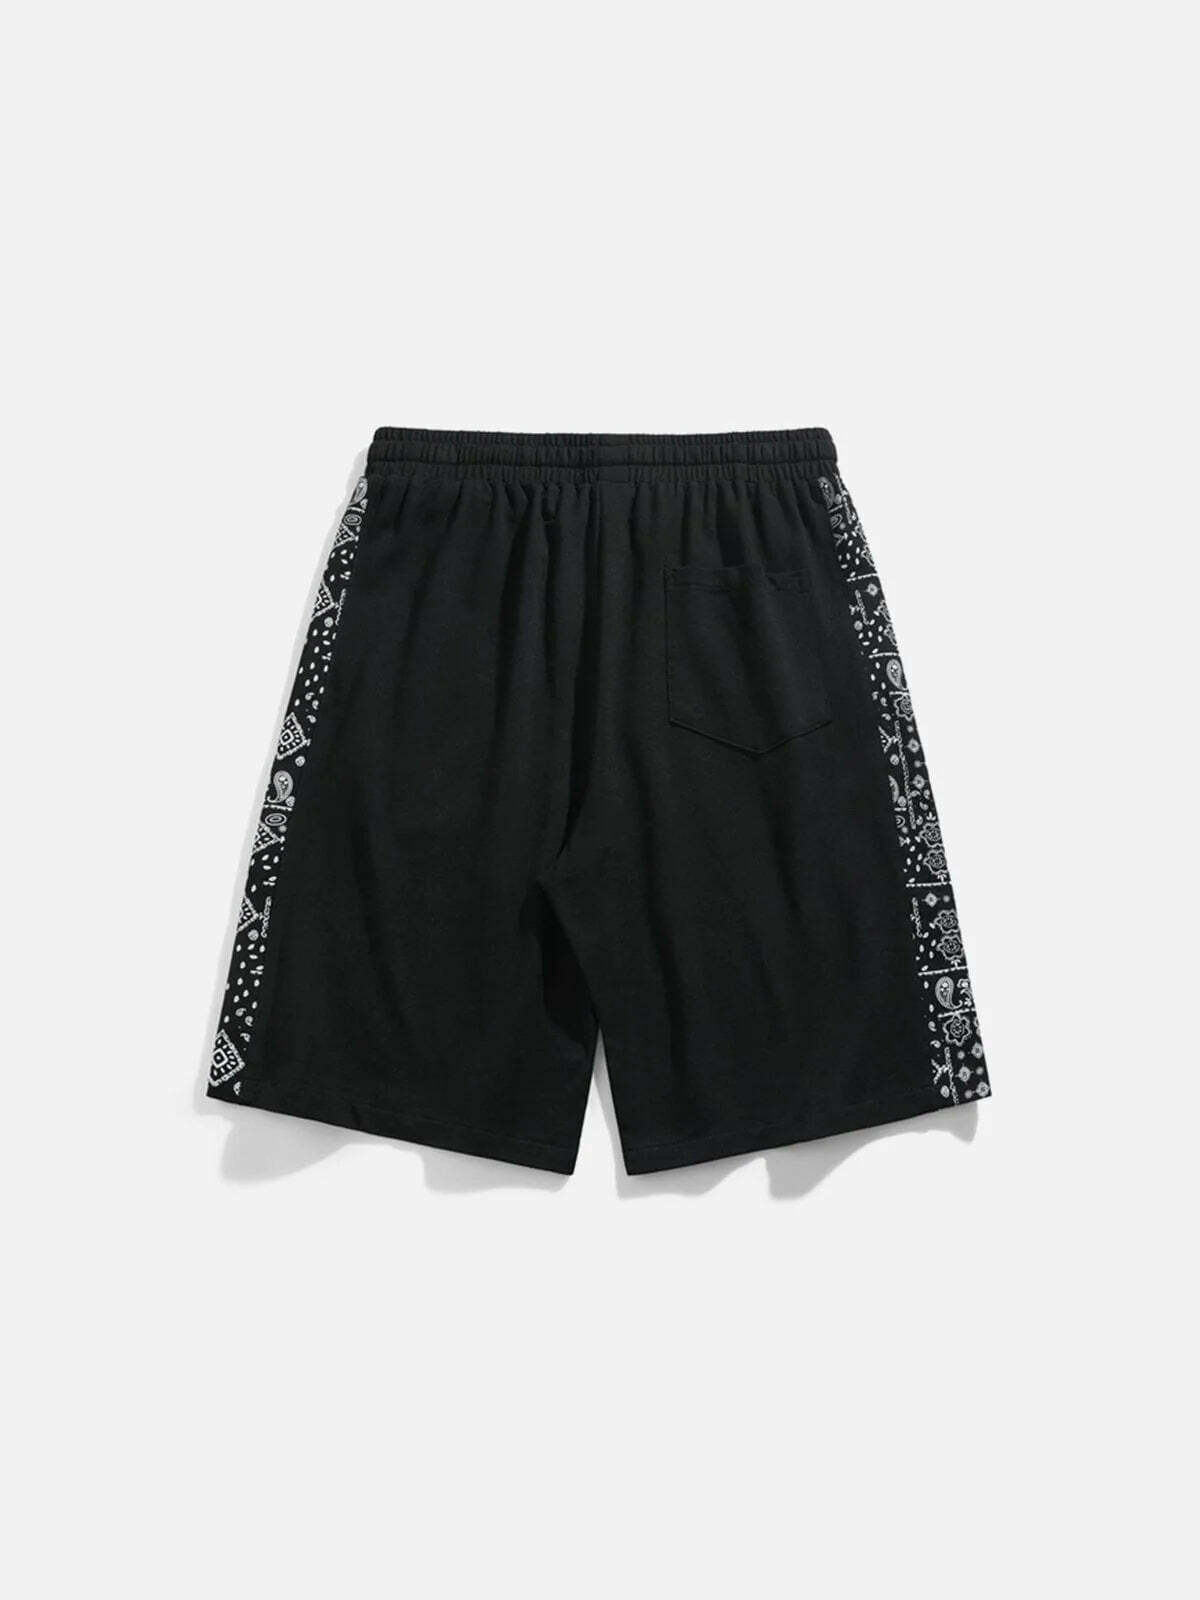 bandana print drawstring shorts edgy streetwear essential 5086